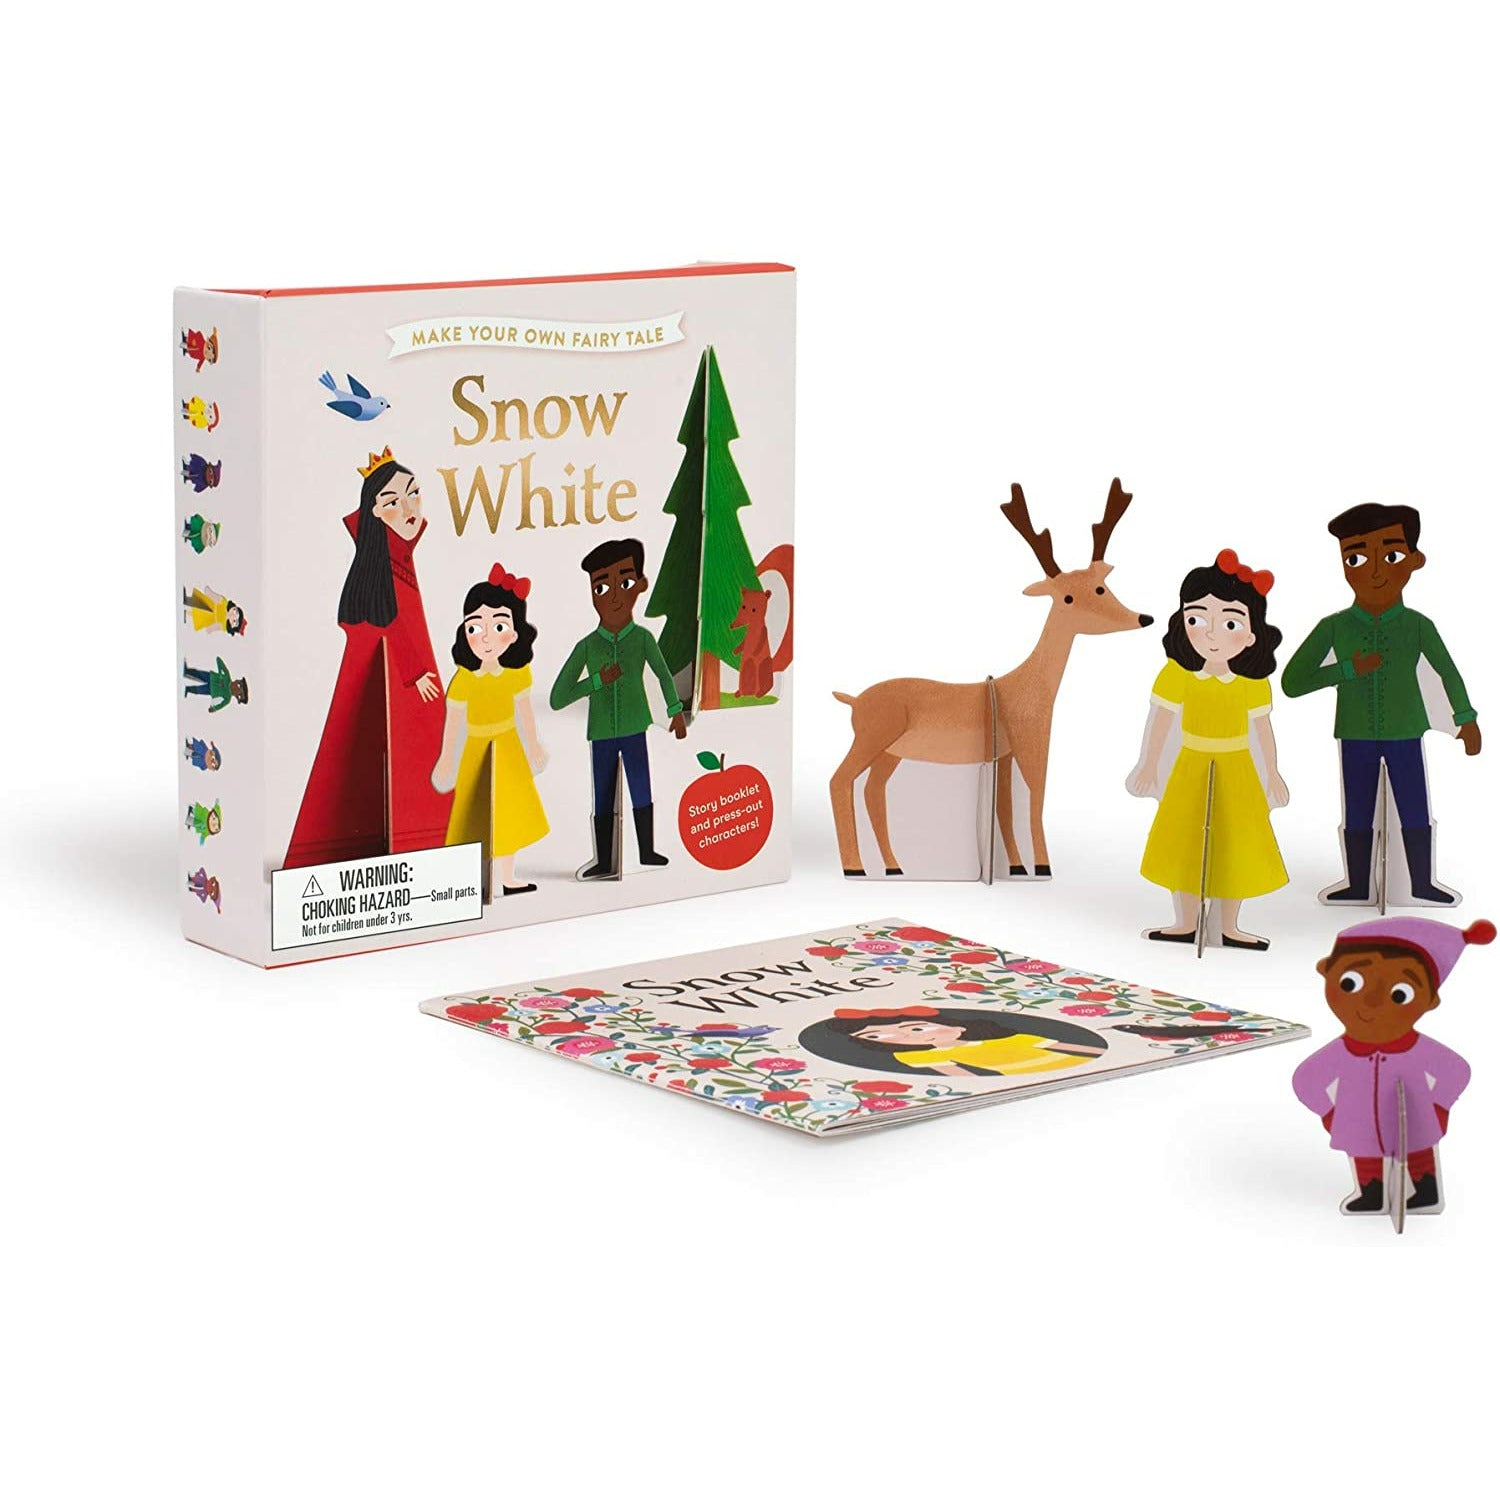 Snow White: Make Your Own Fairytale BookGeek